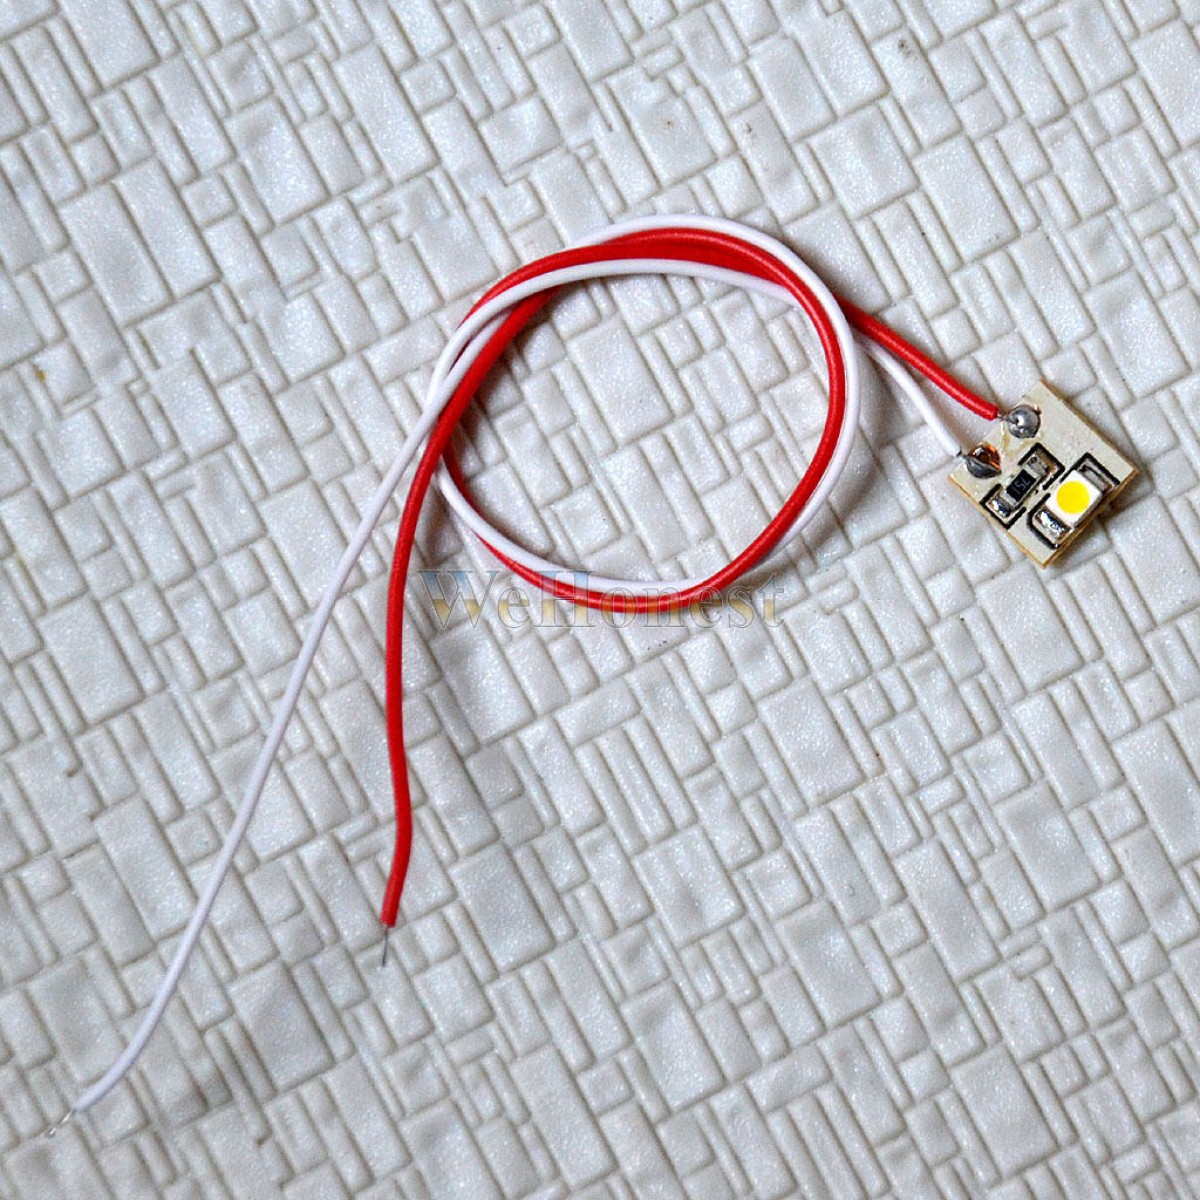 8 x  Pre-Wired warm white SMD LEDs prewired resistor for 12V - 16V use